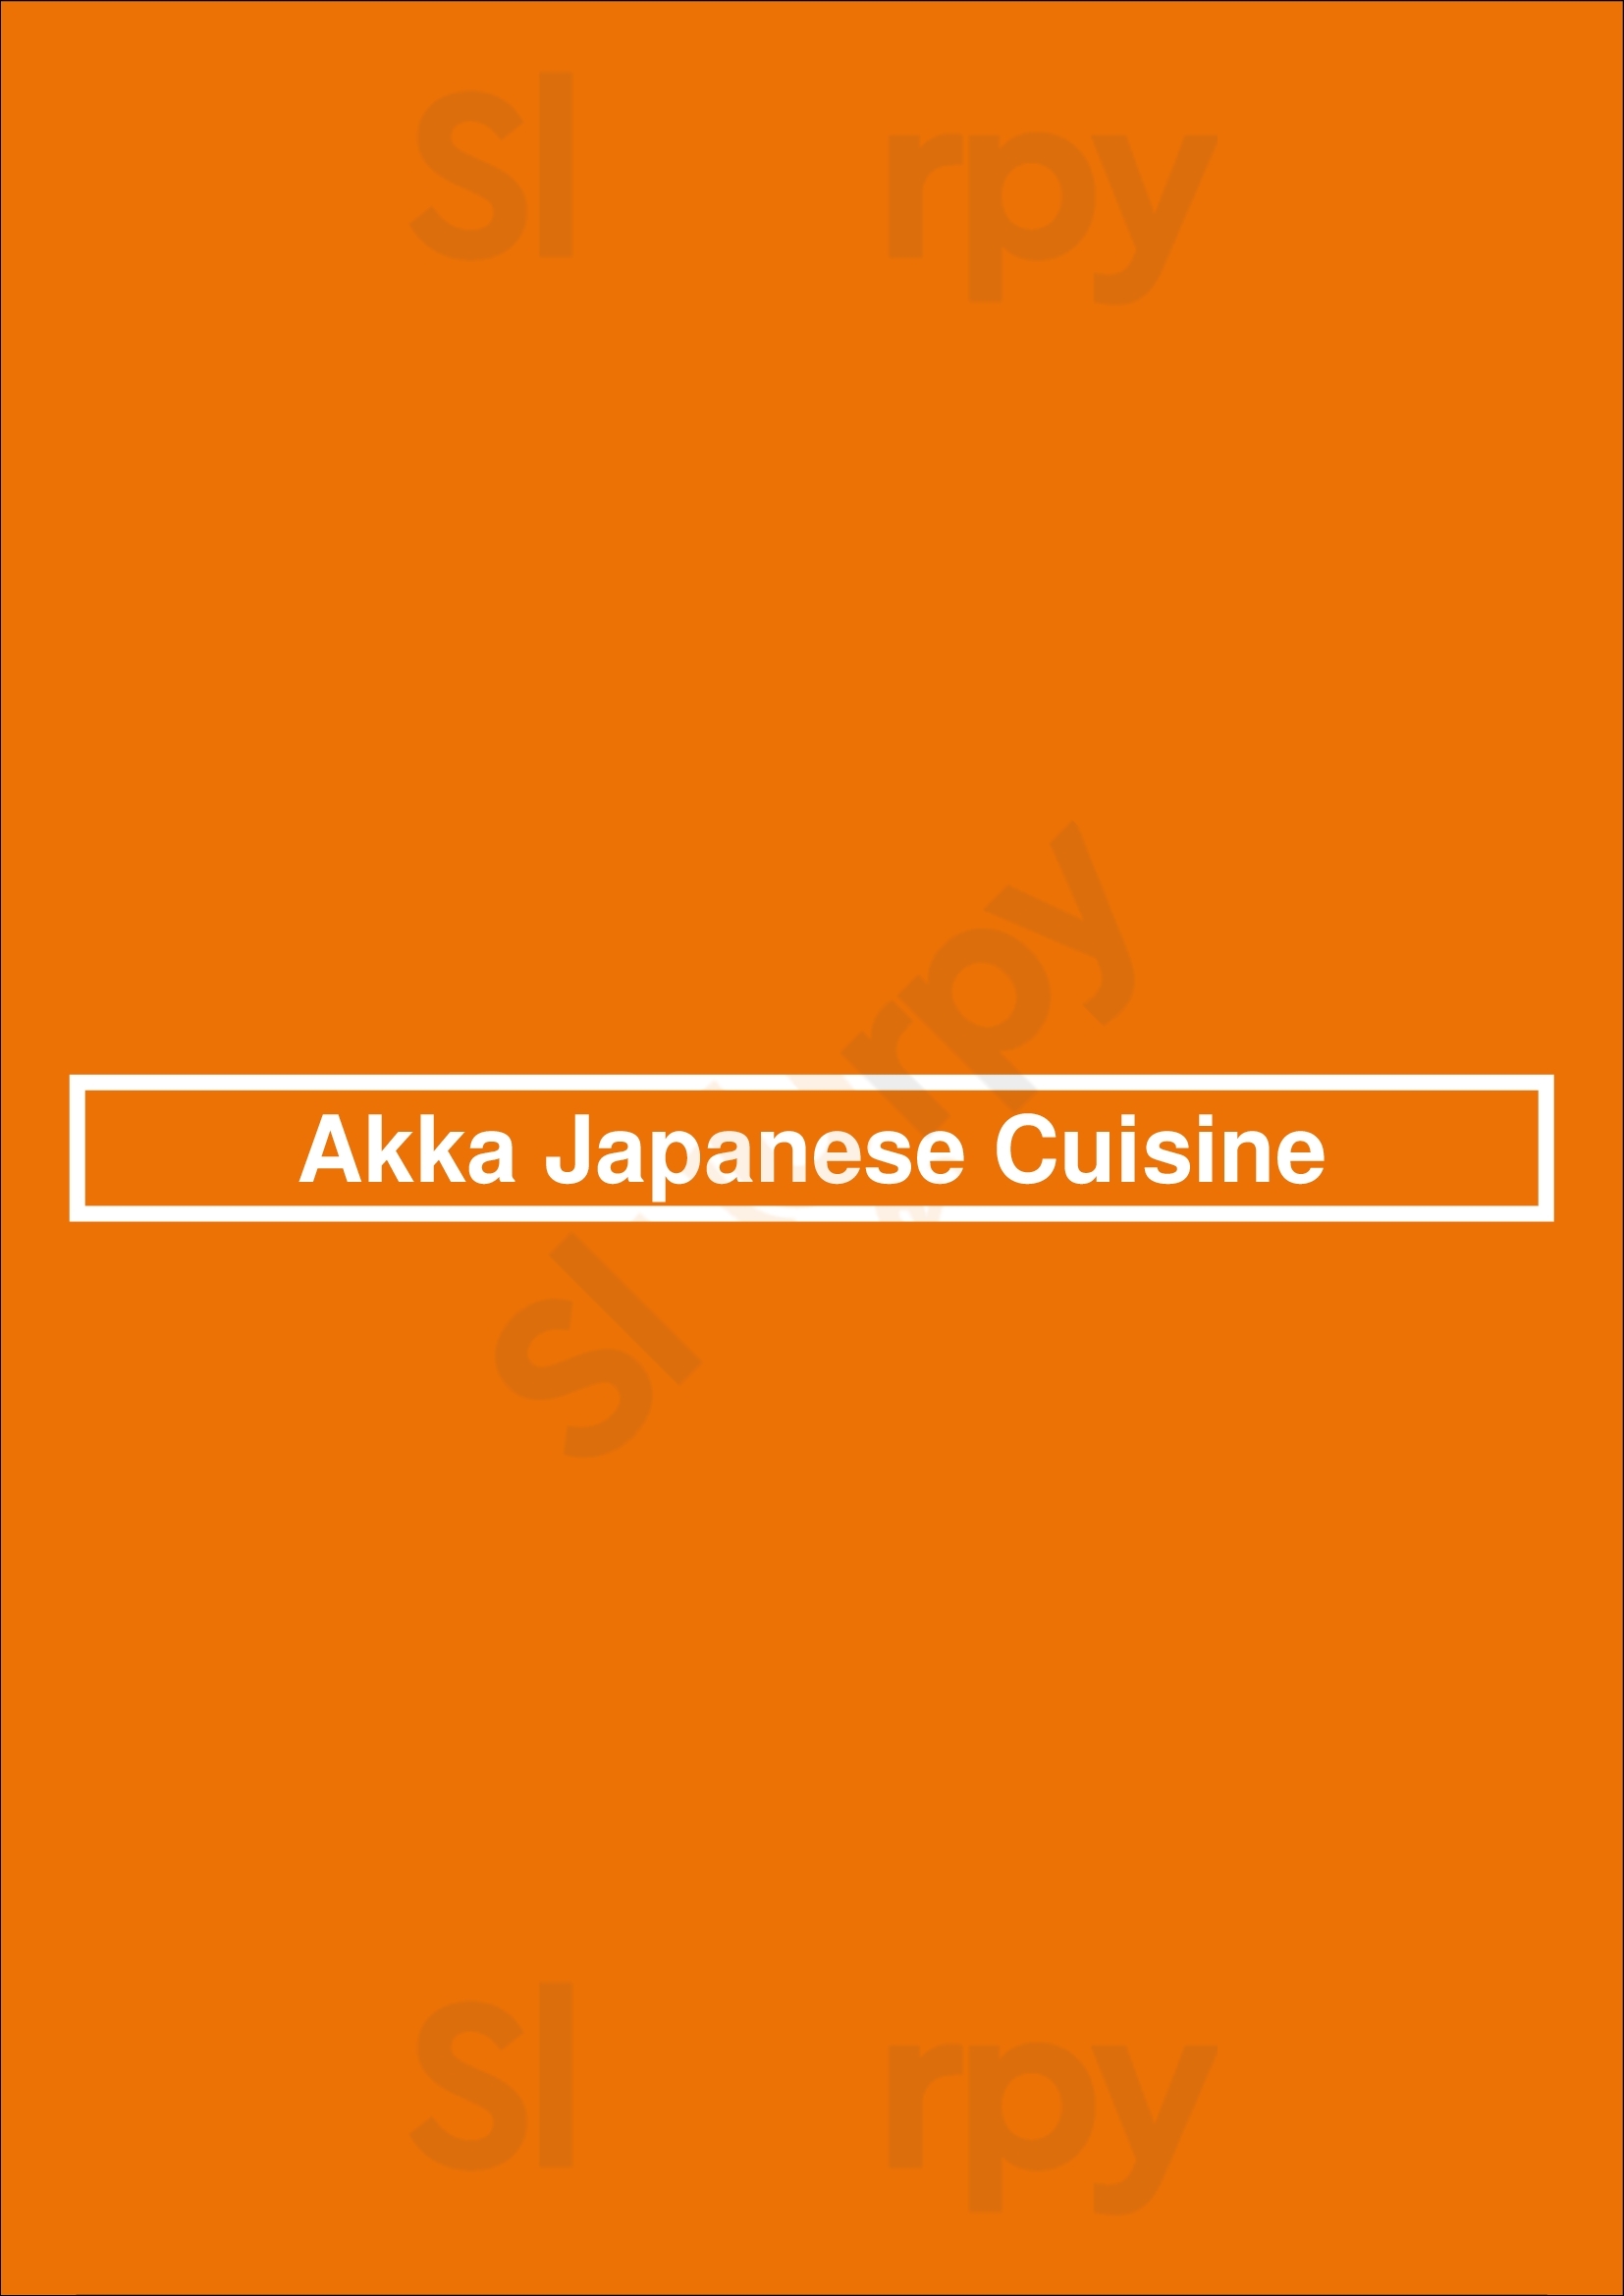 Akka Japanese Cuisine Porto Menu - 1